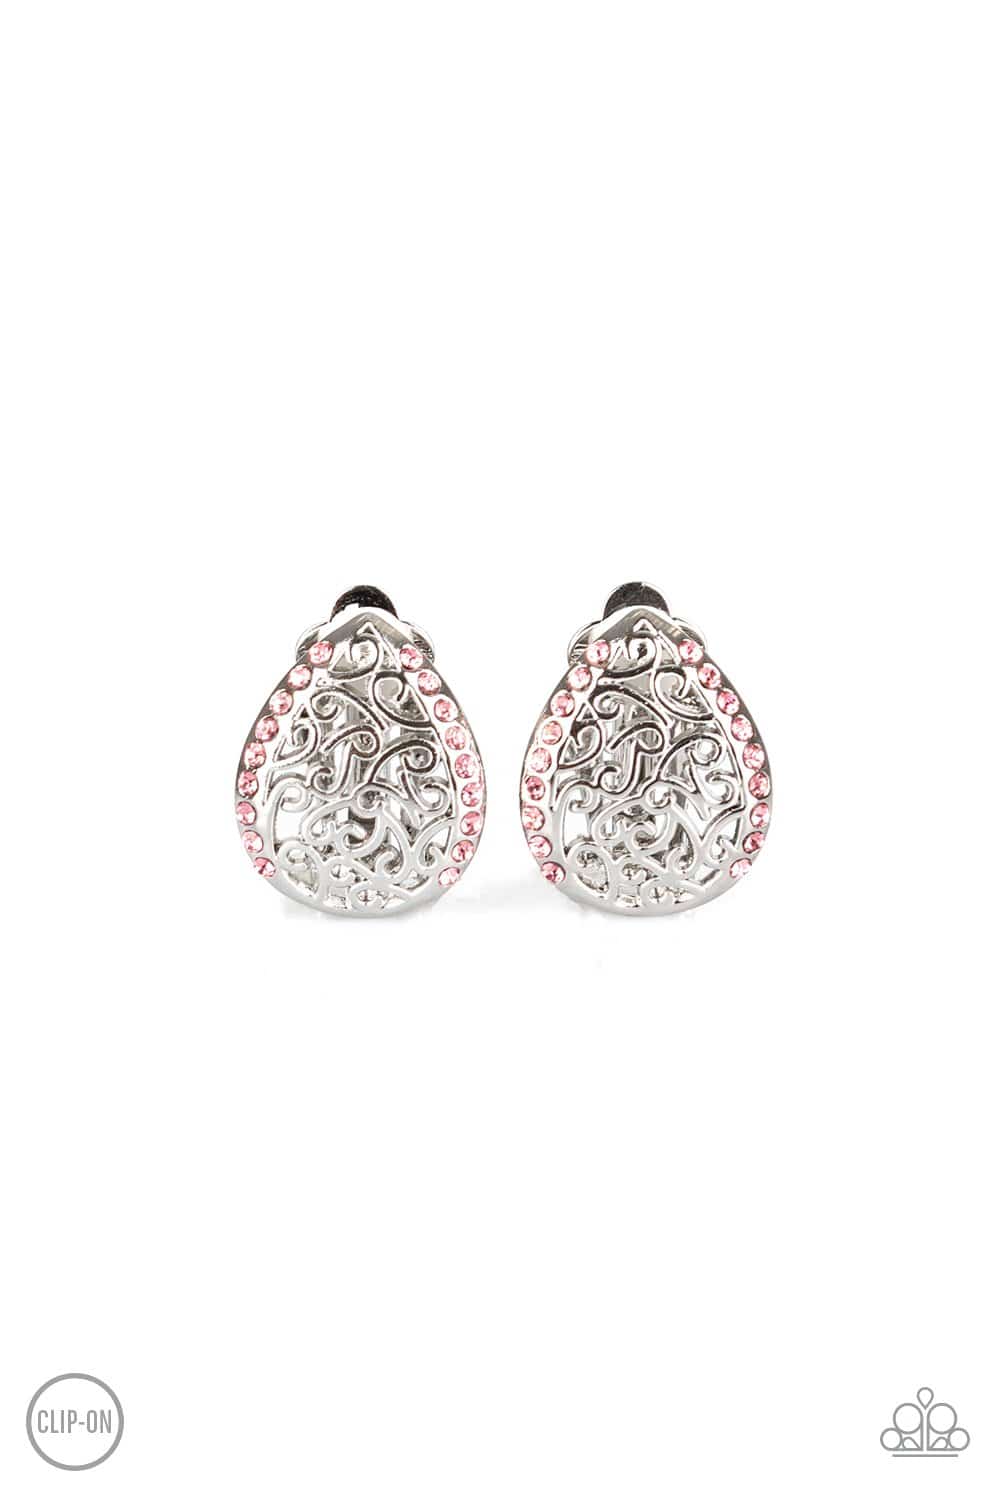 Garden Date Pink Clip-on Earrings - Paparazzi Accessories - GlaMarous Titi Jewels